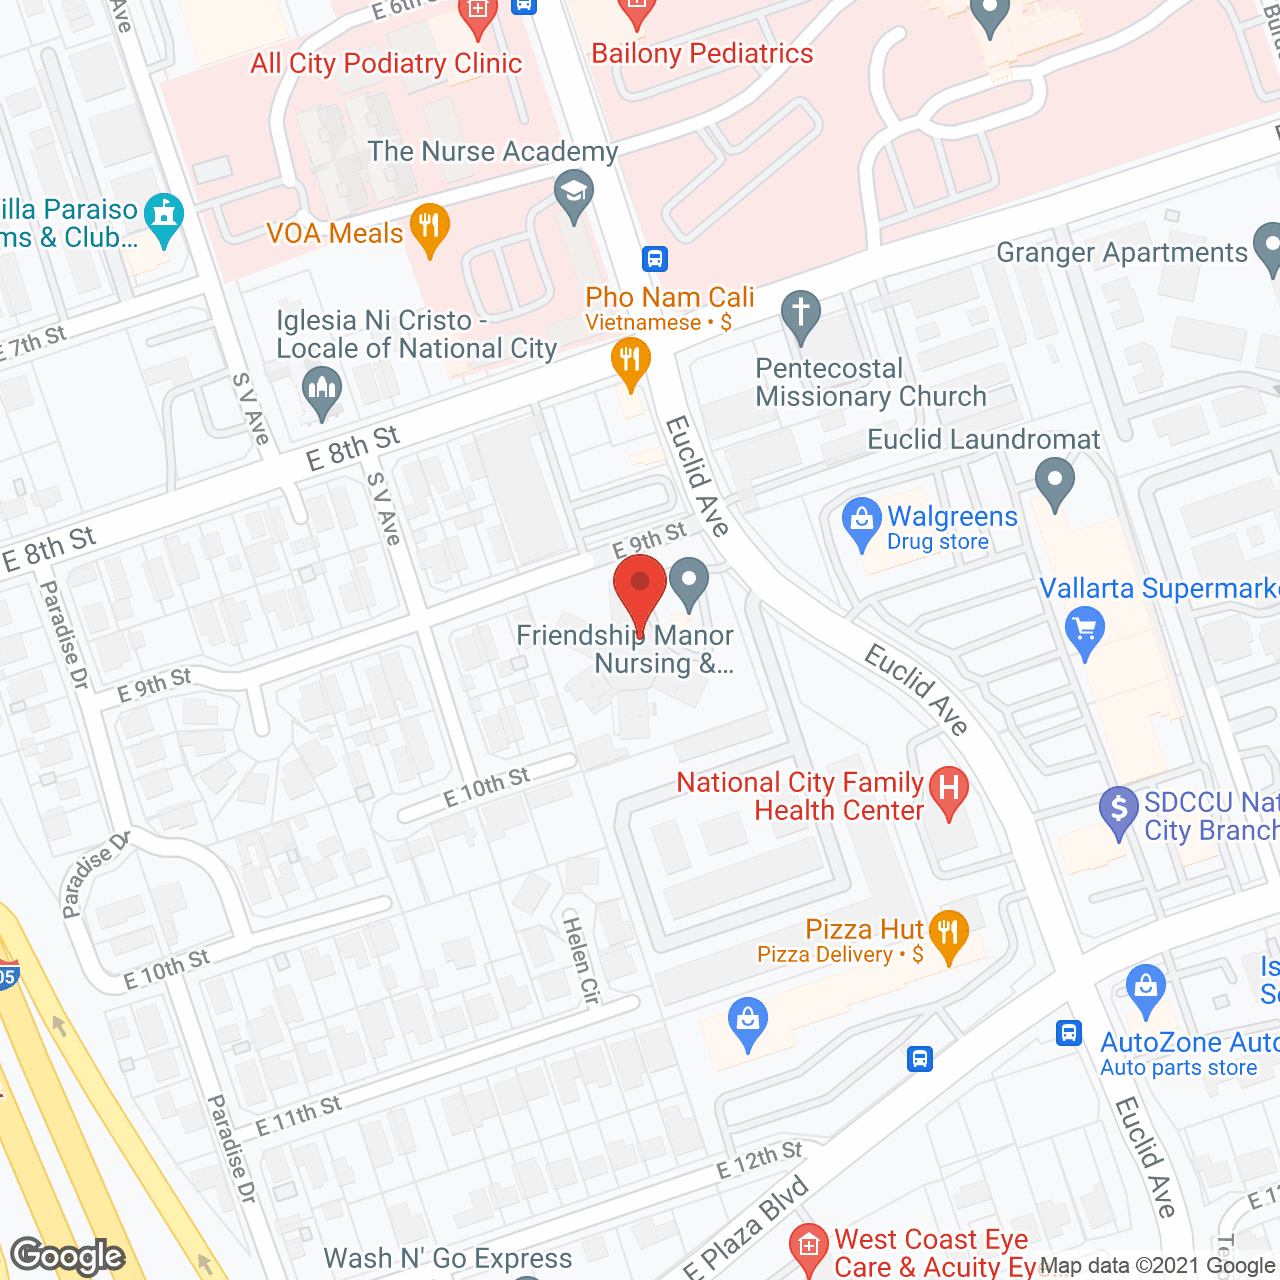 Friendship Manor Nursing and Rehabilitation Center in google map